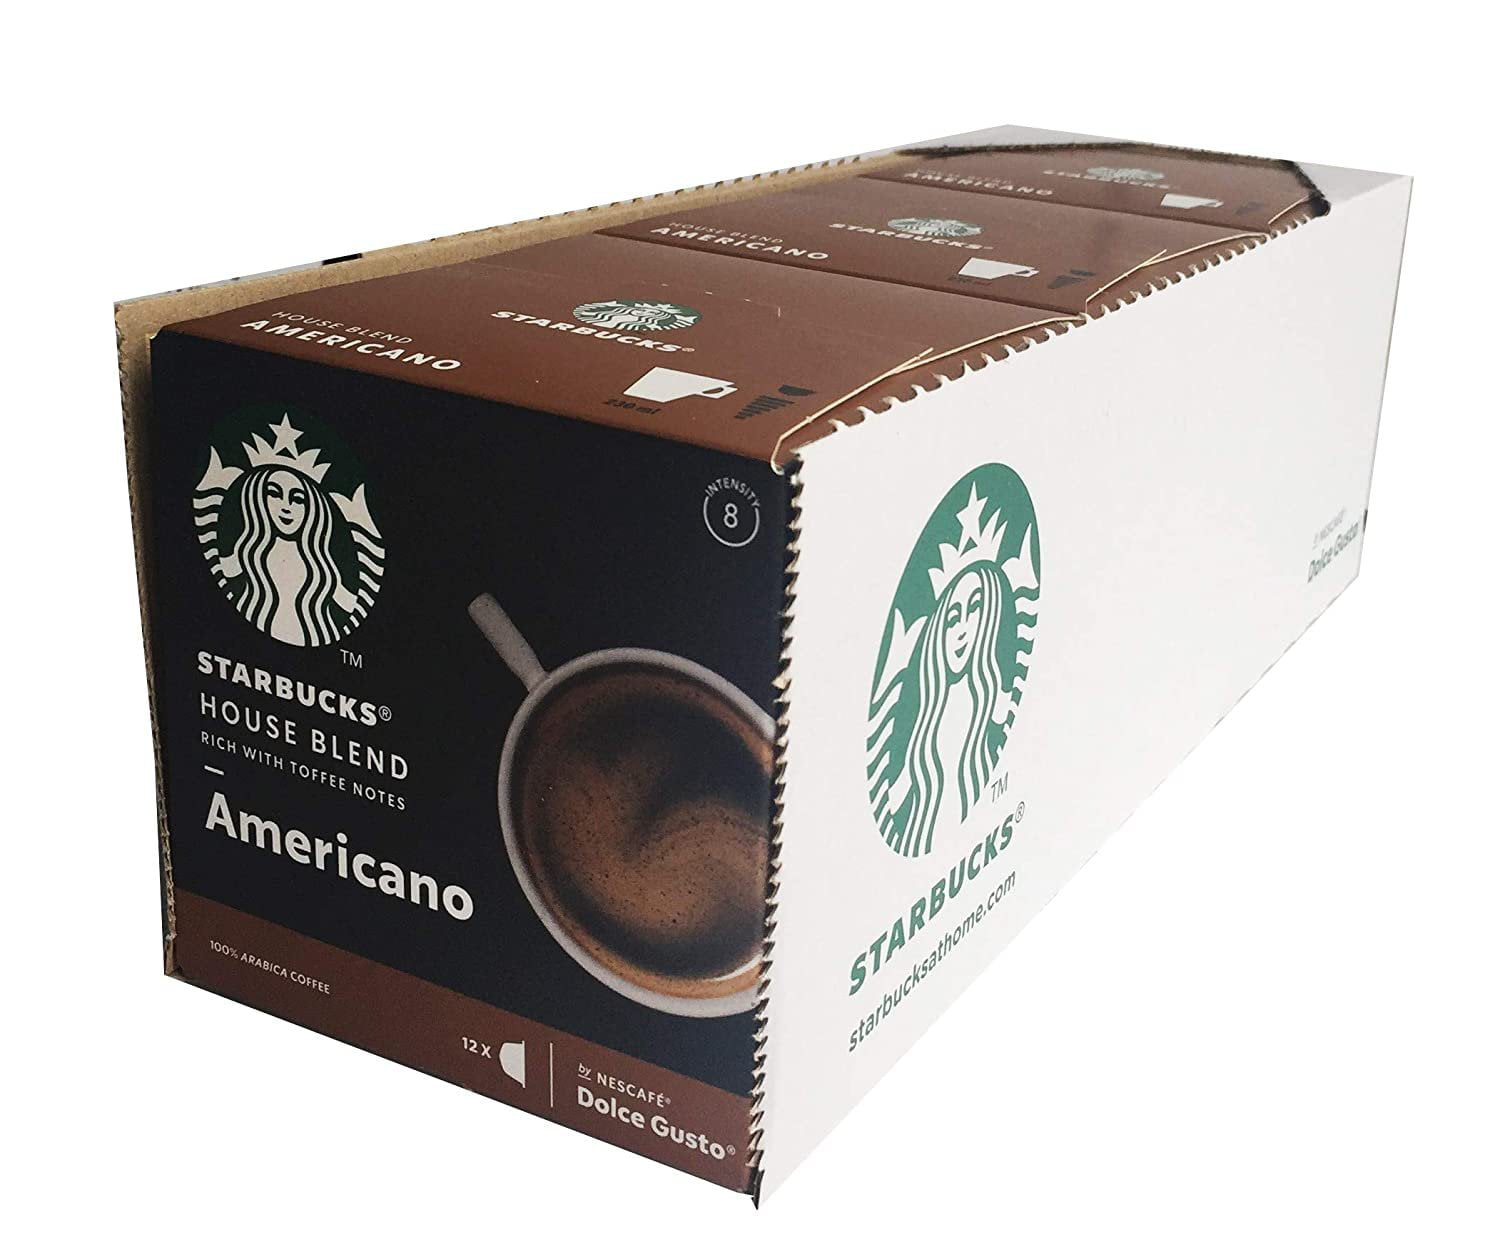 Starbucks Nescafe Dolce Gusto Capsule Coffee 96g - 256g